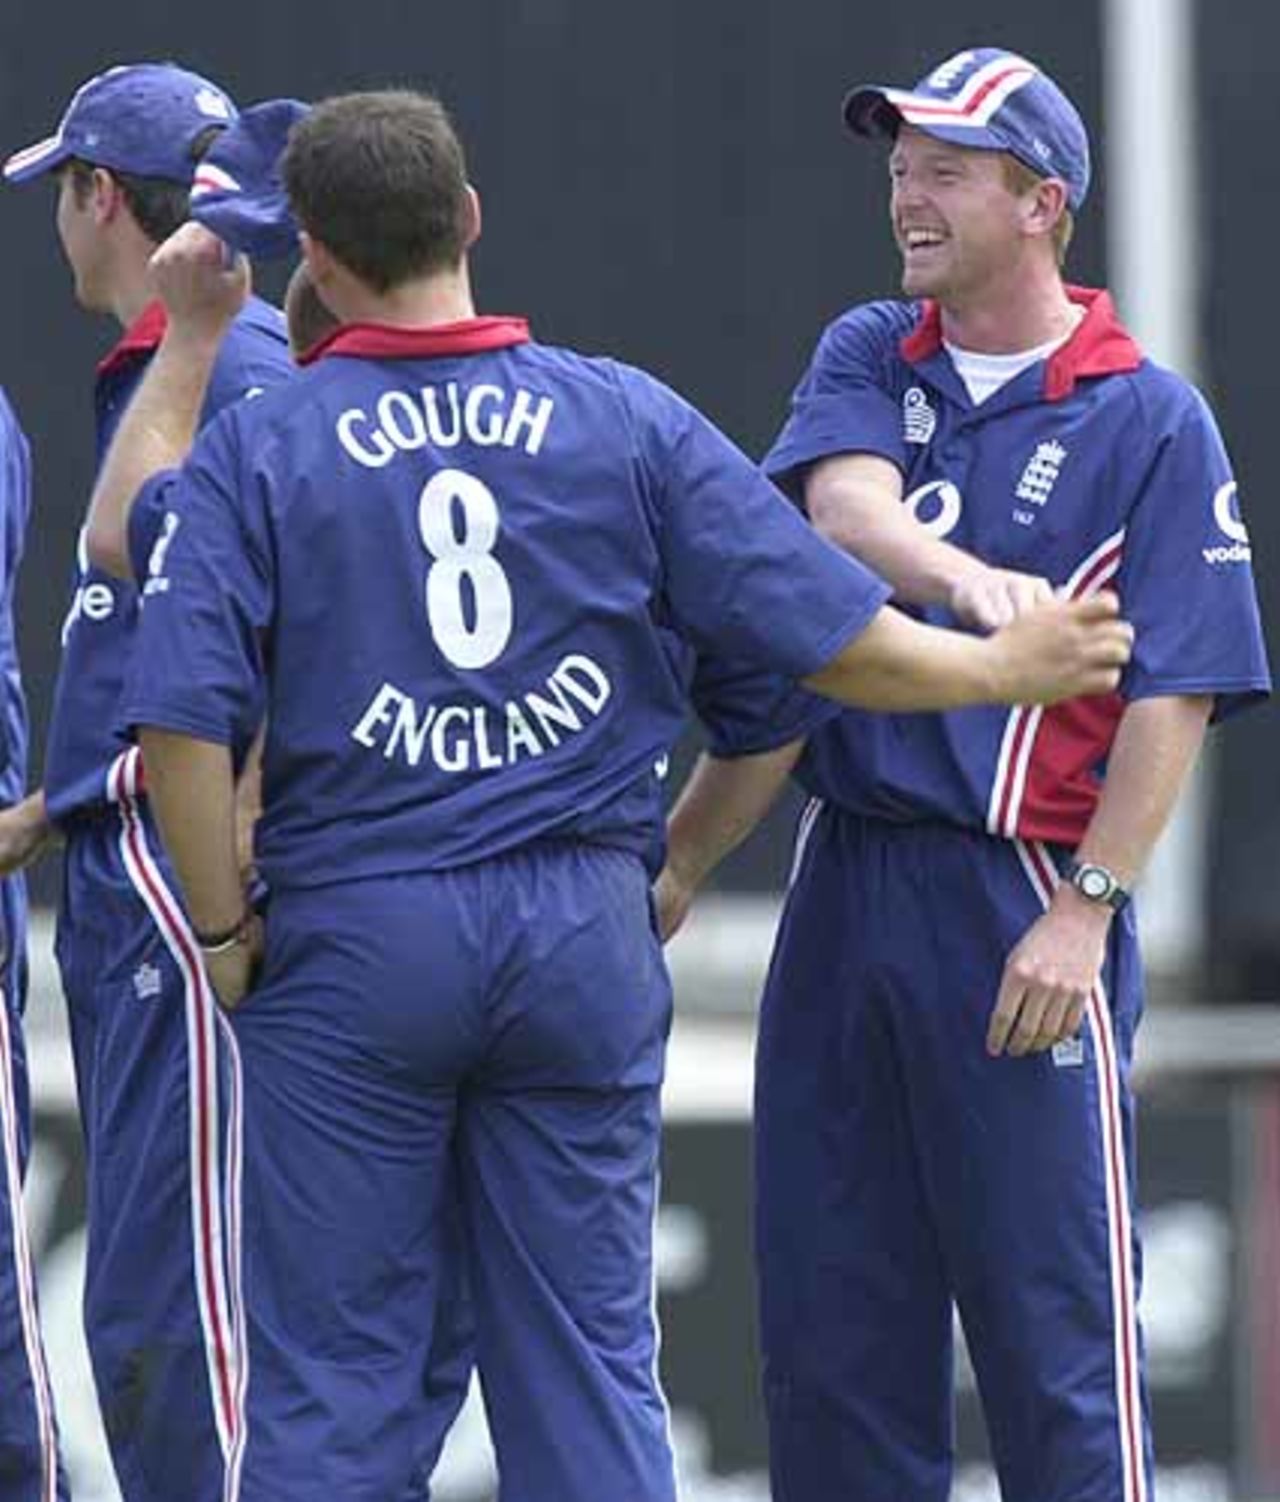 Paul Collingwood has just brilliantly thrown out Atapattu, England v Sri Lanka at Manchester, July 2002